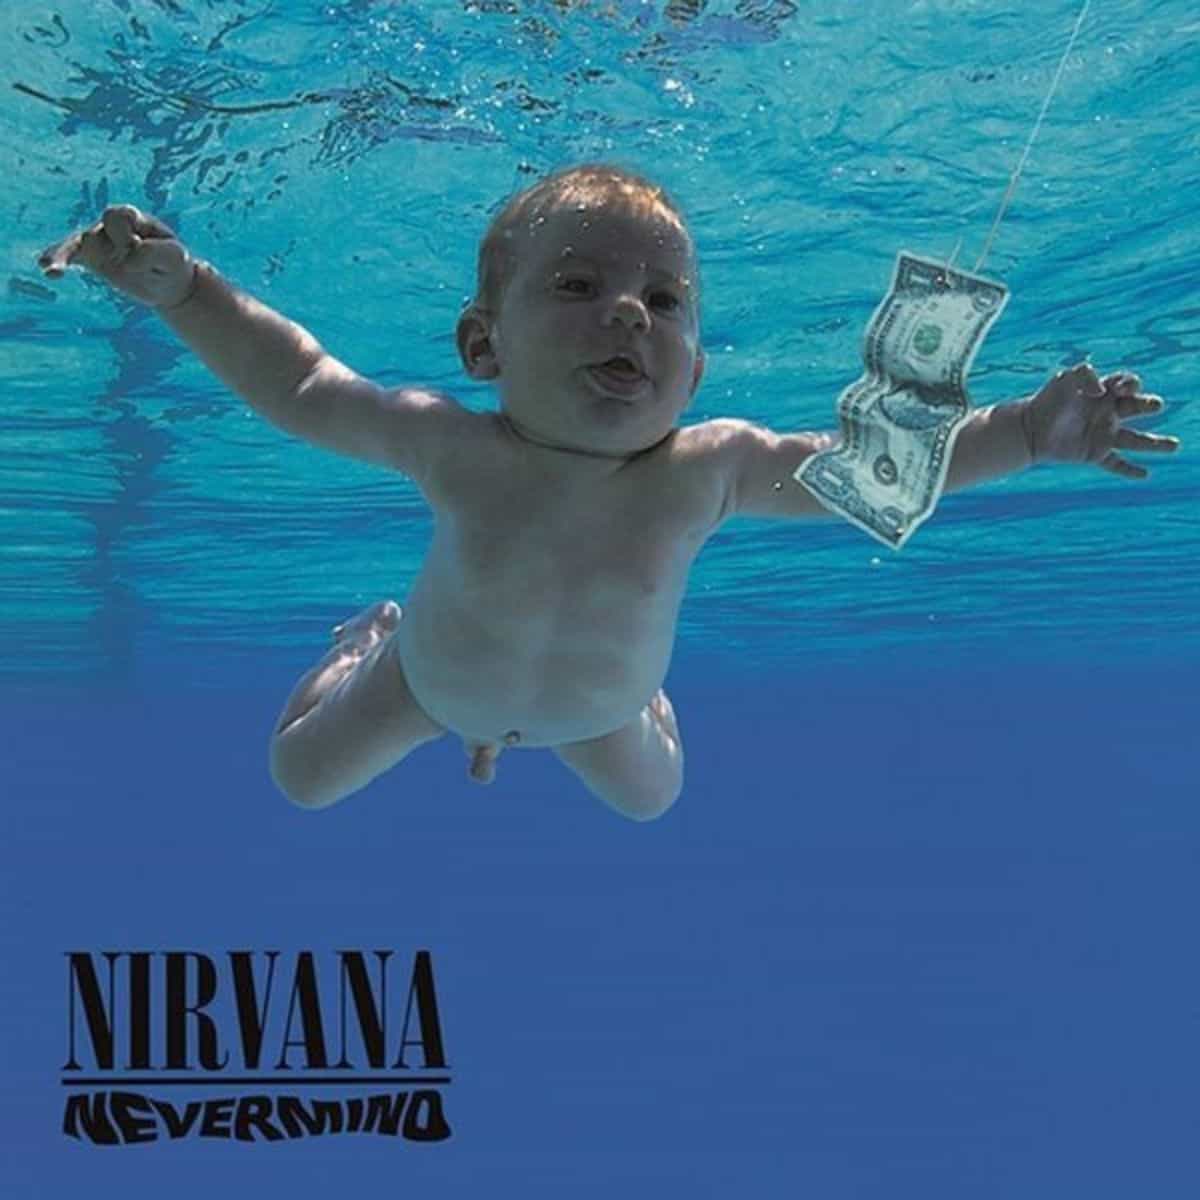 Nirvana's Nevermind album cover